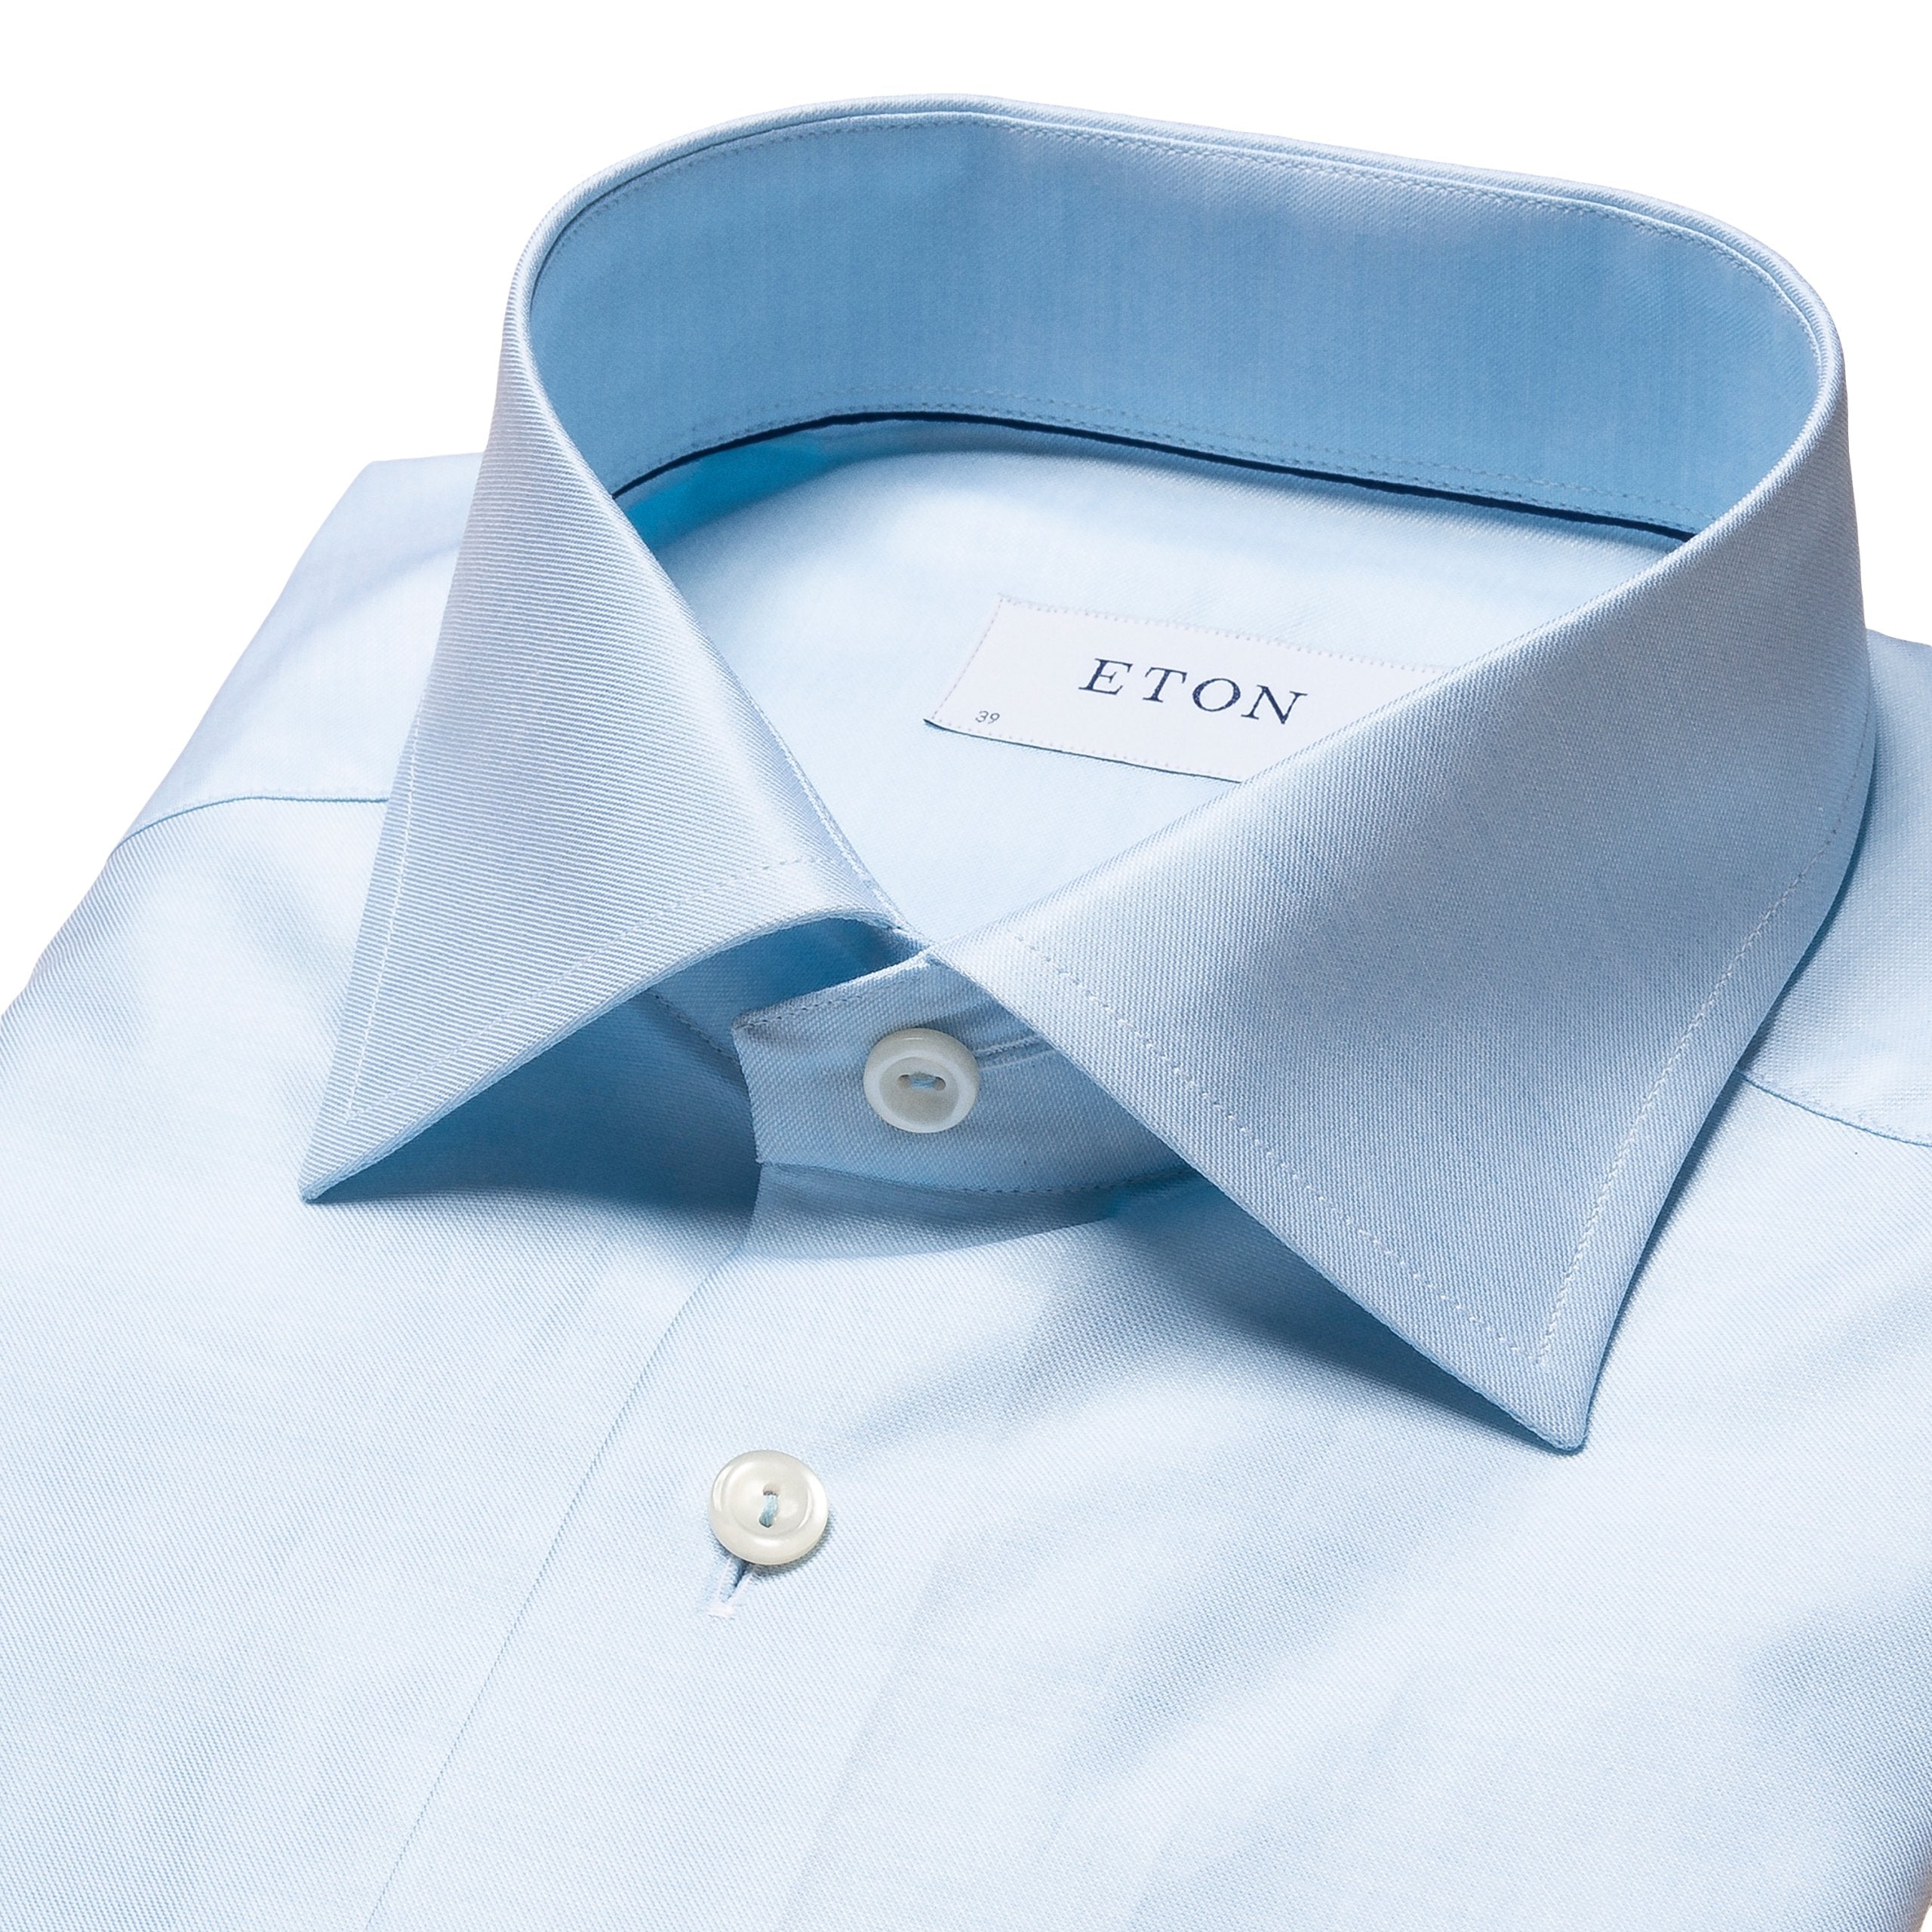 Eton Slim Fit Royal Twill Floral Shirt 22 Light Blue